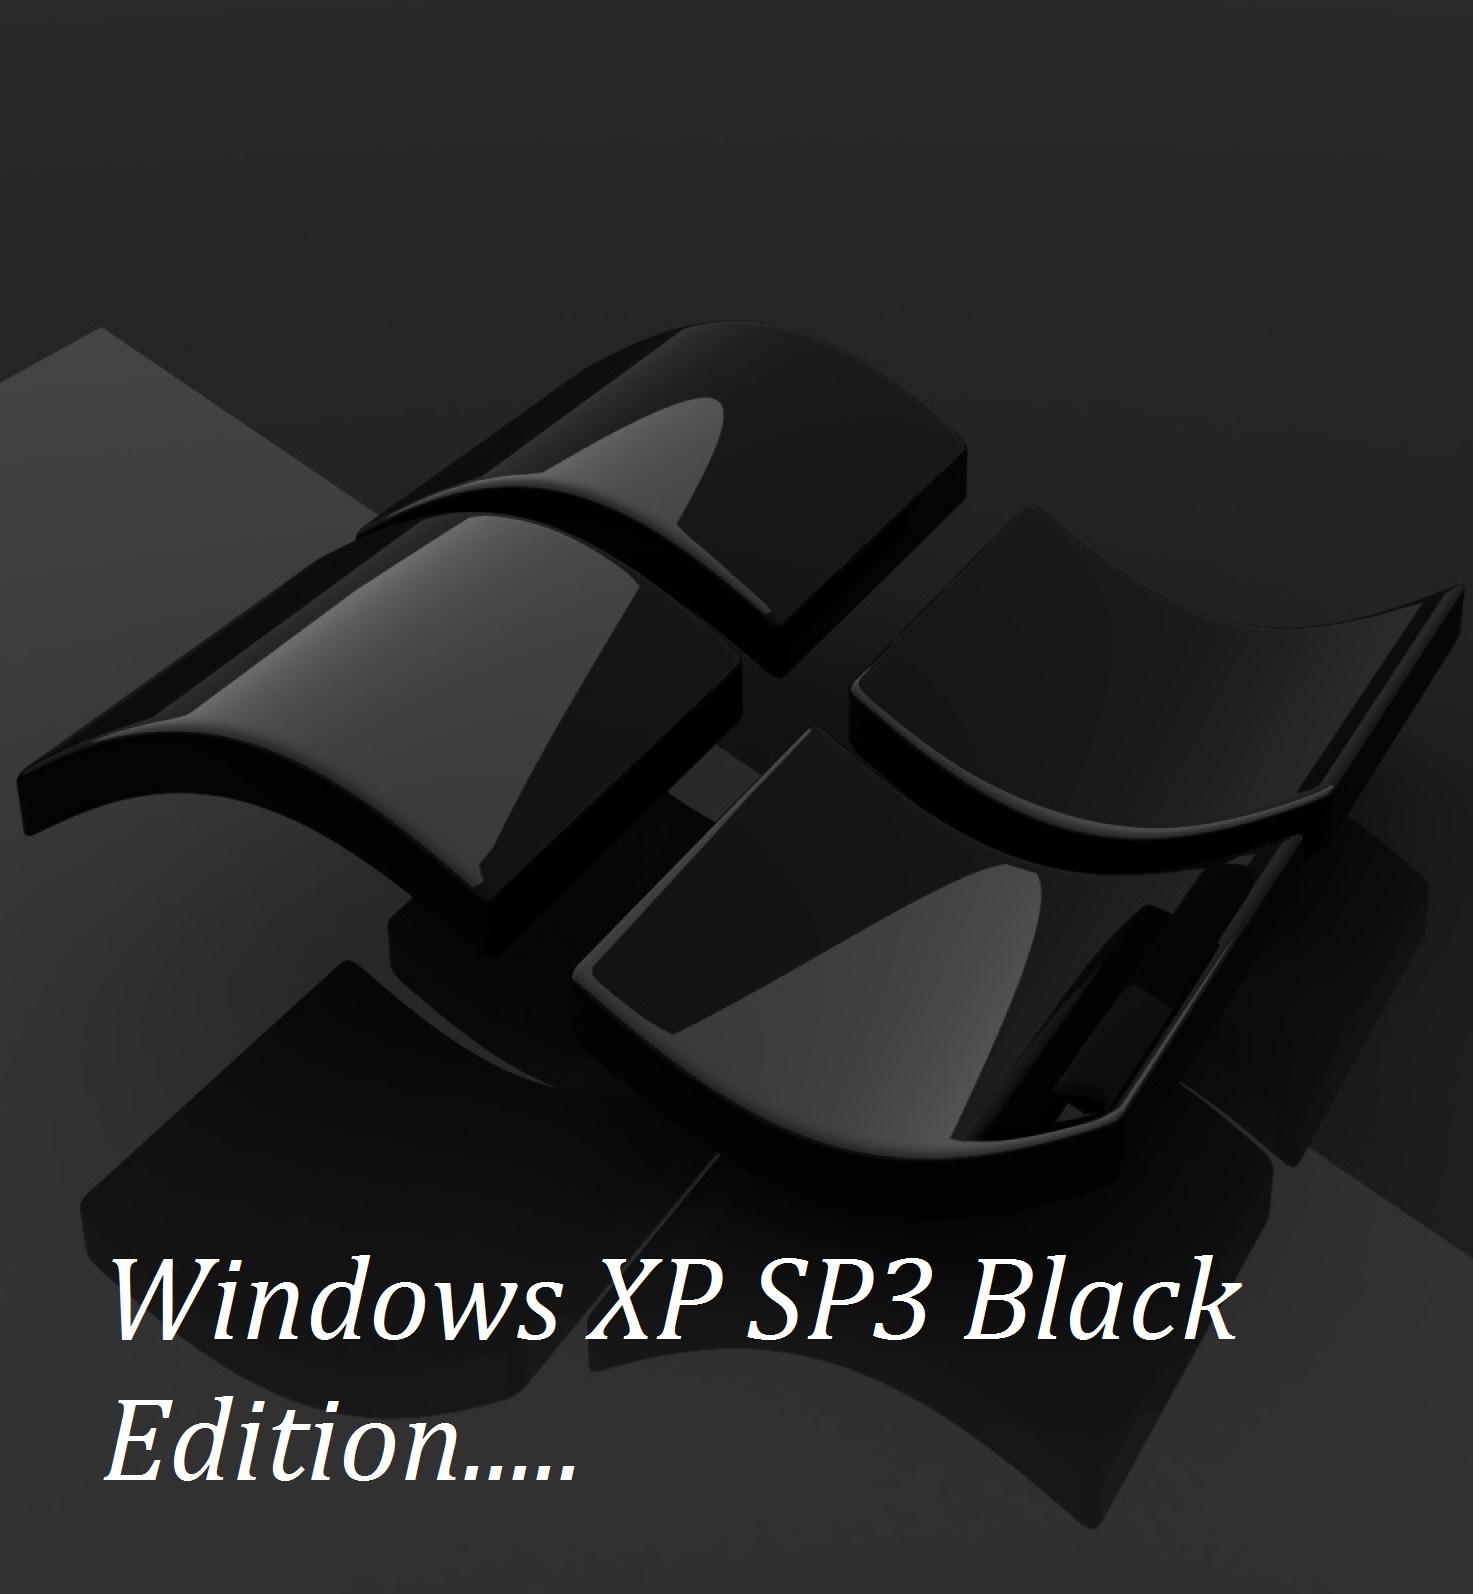 Windows xp sp3 black edition 2014 product key